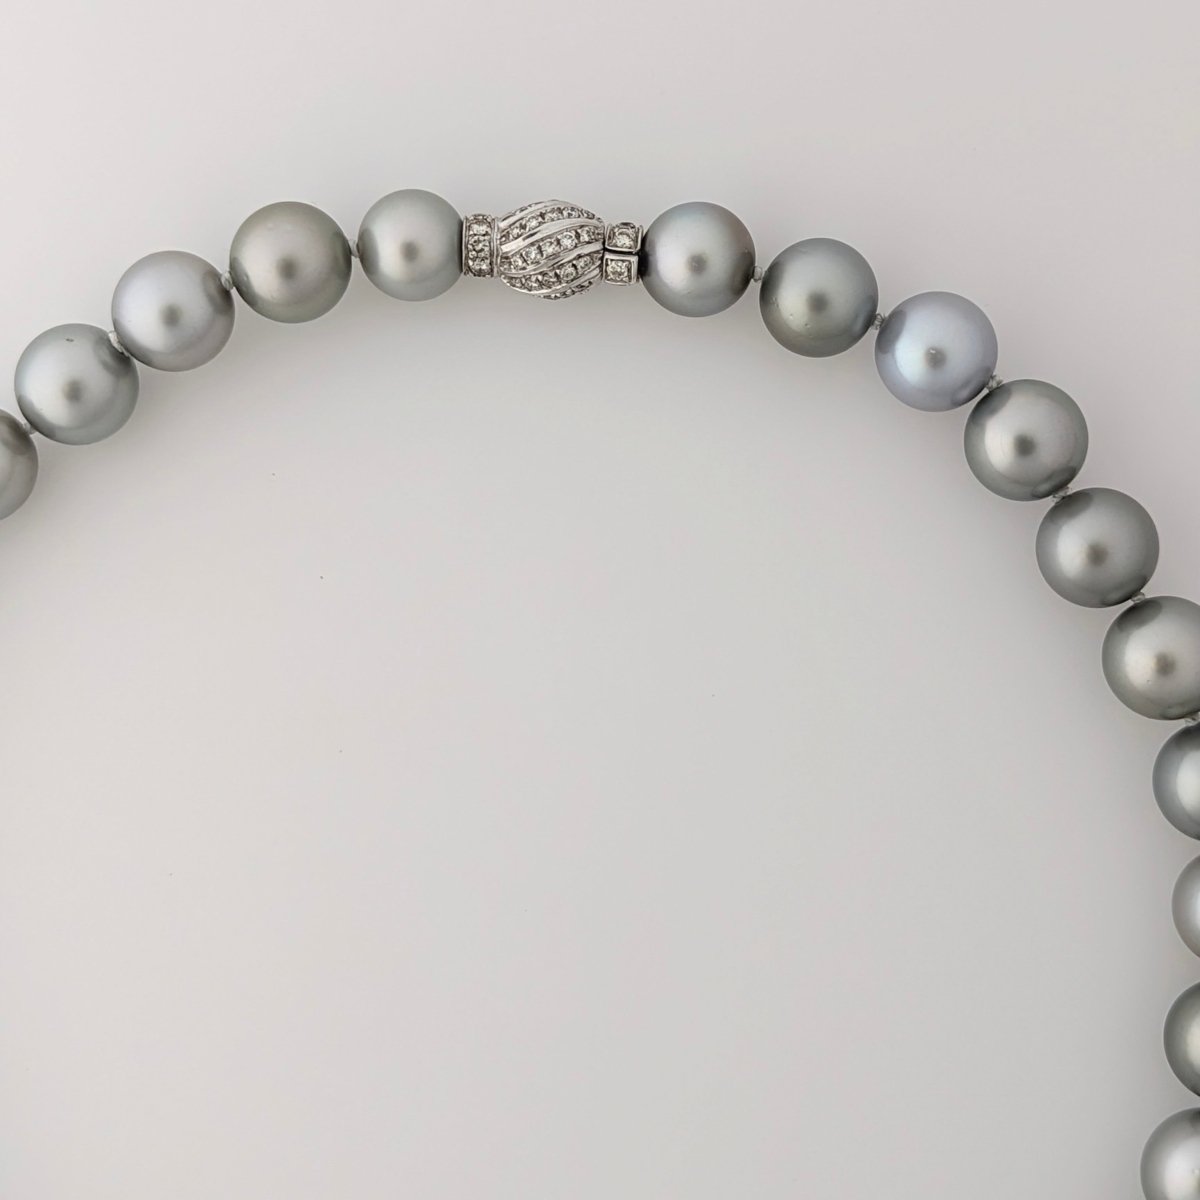 11-15mm Silver Gray Tahitian Pearl Necklace - Marina Korneev Fine Pearls